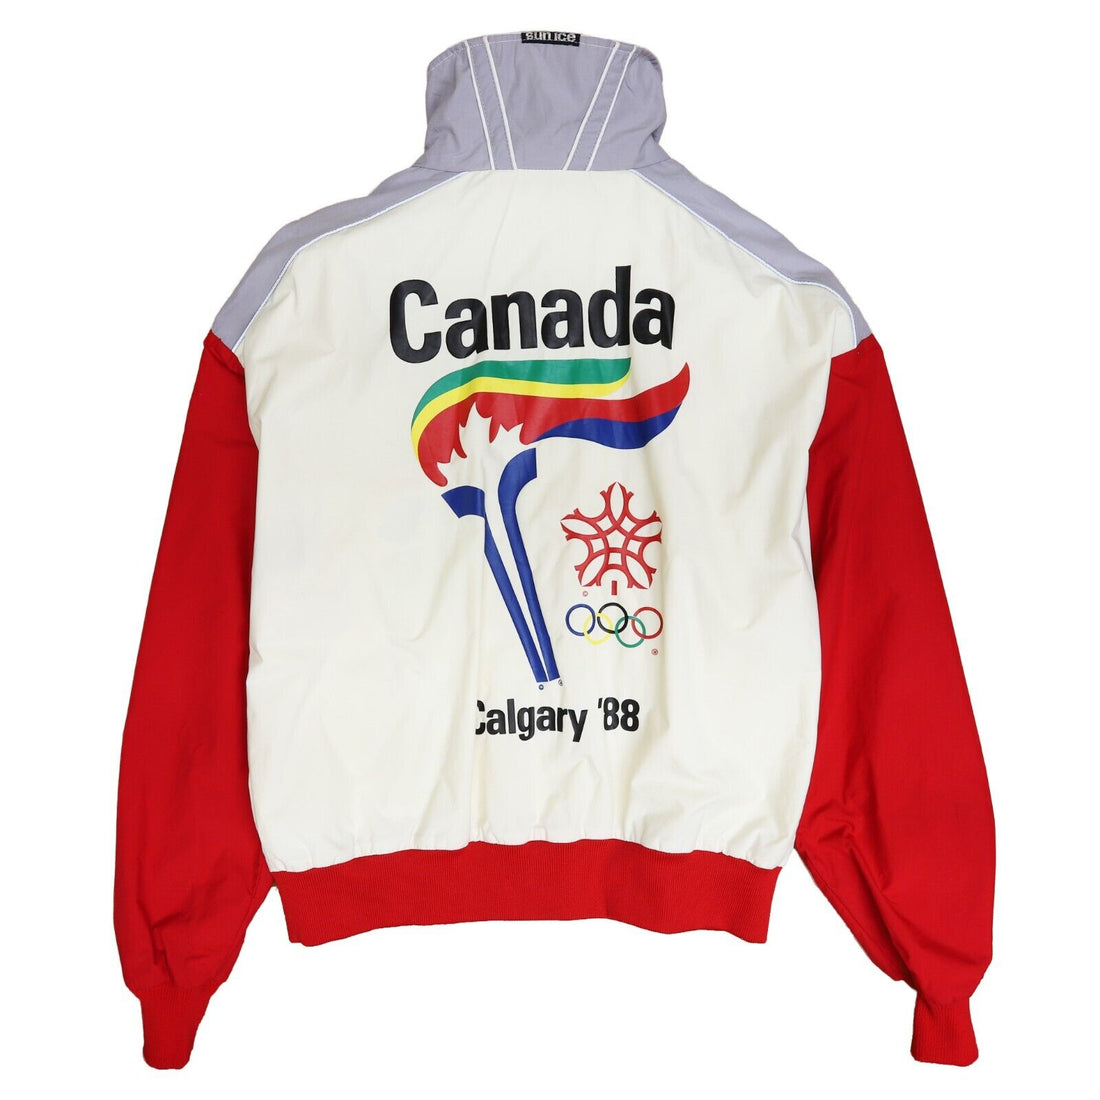 Vintage Canada Calgary Winter Olympics Windbreaker Jacket XL Torch Runner 1988